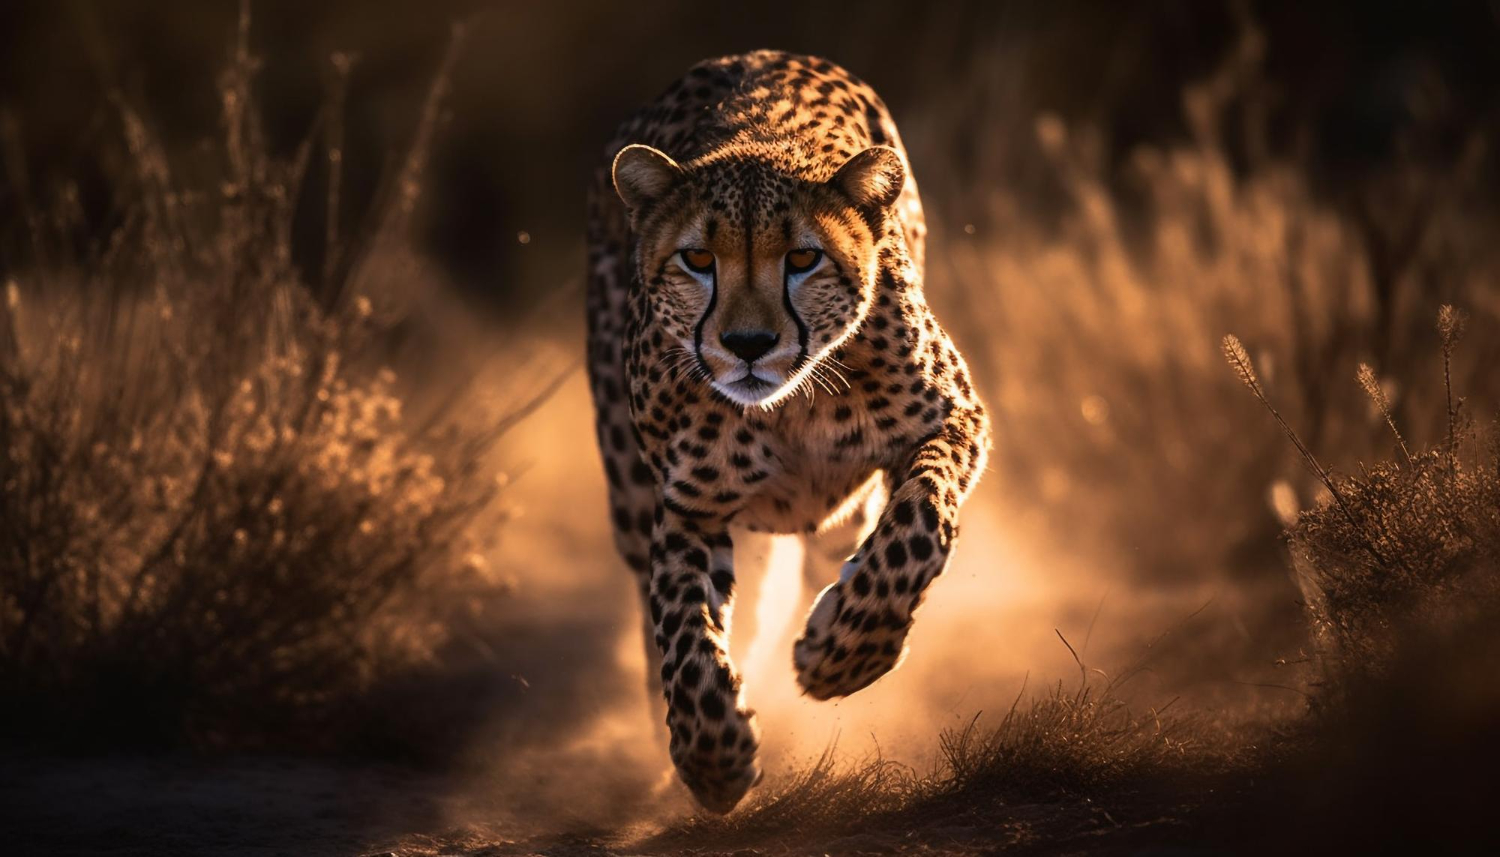 The Marvelous Cheetah: Swift, Sleek, and Graceful